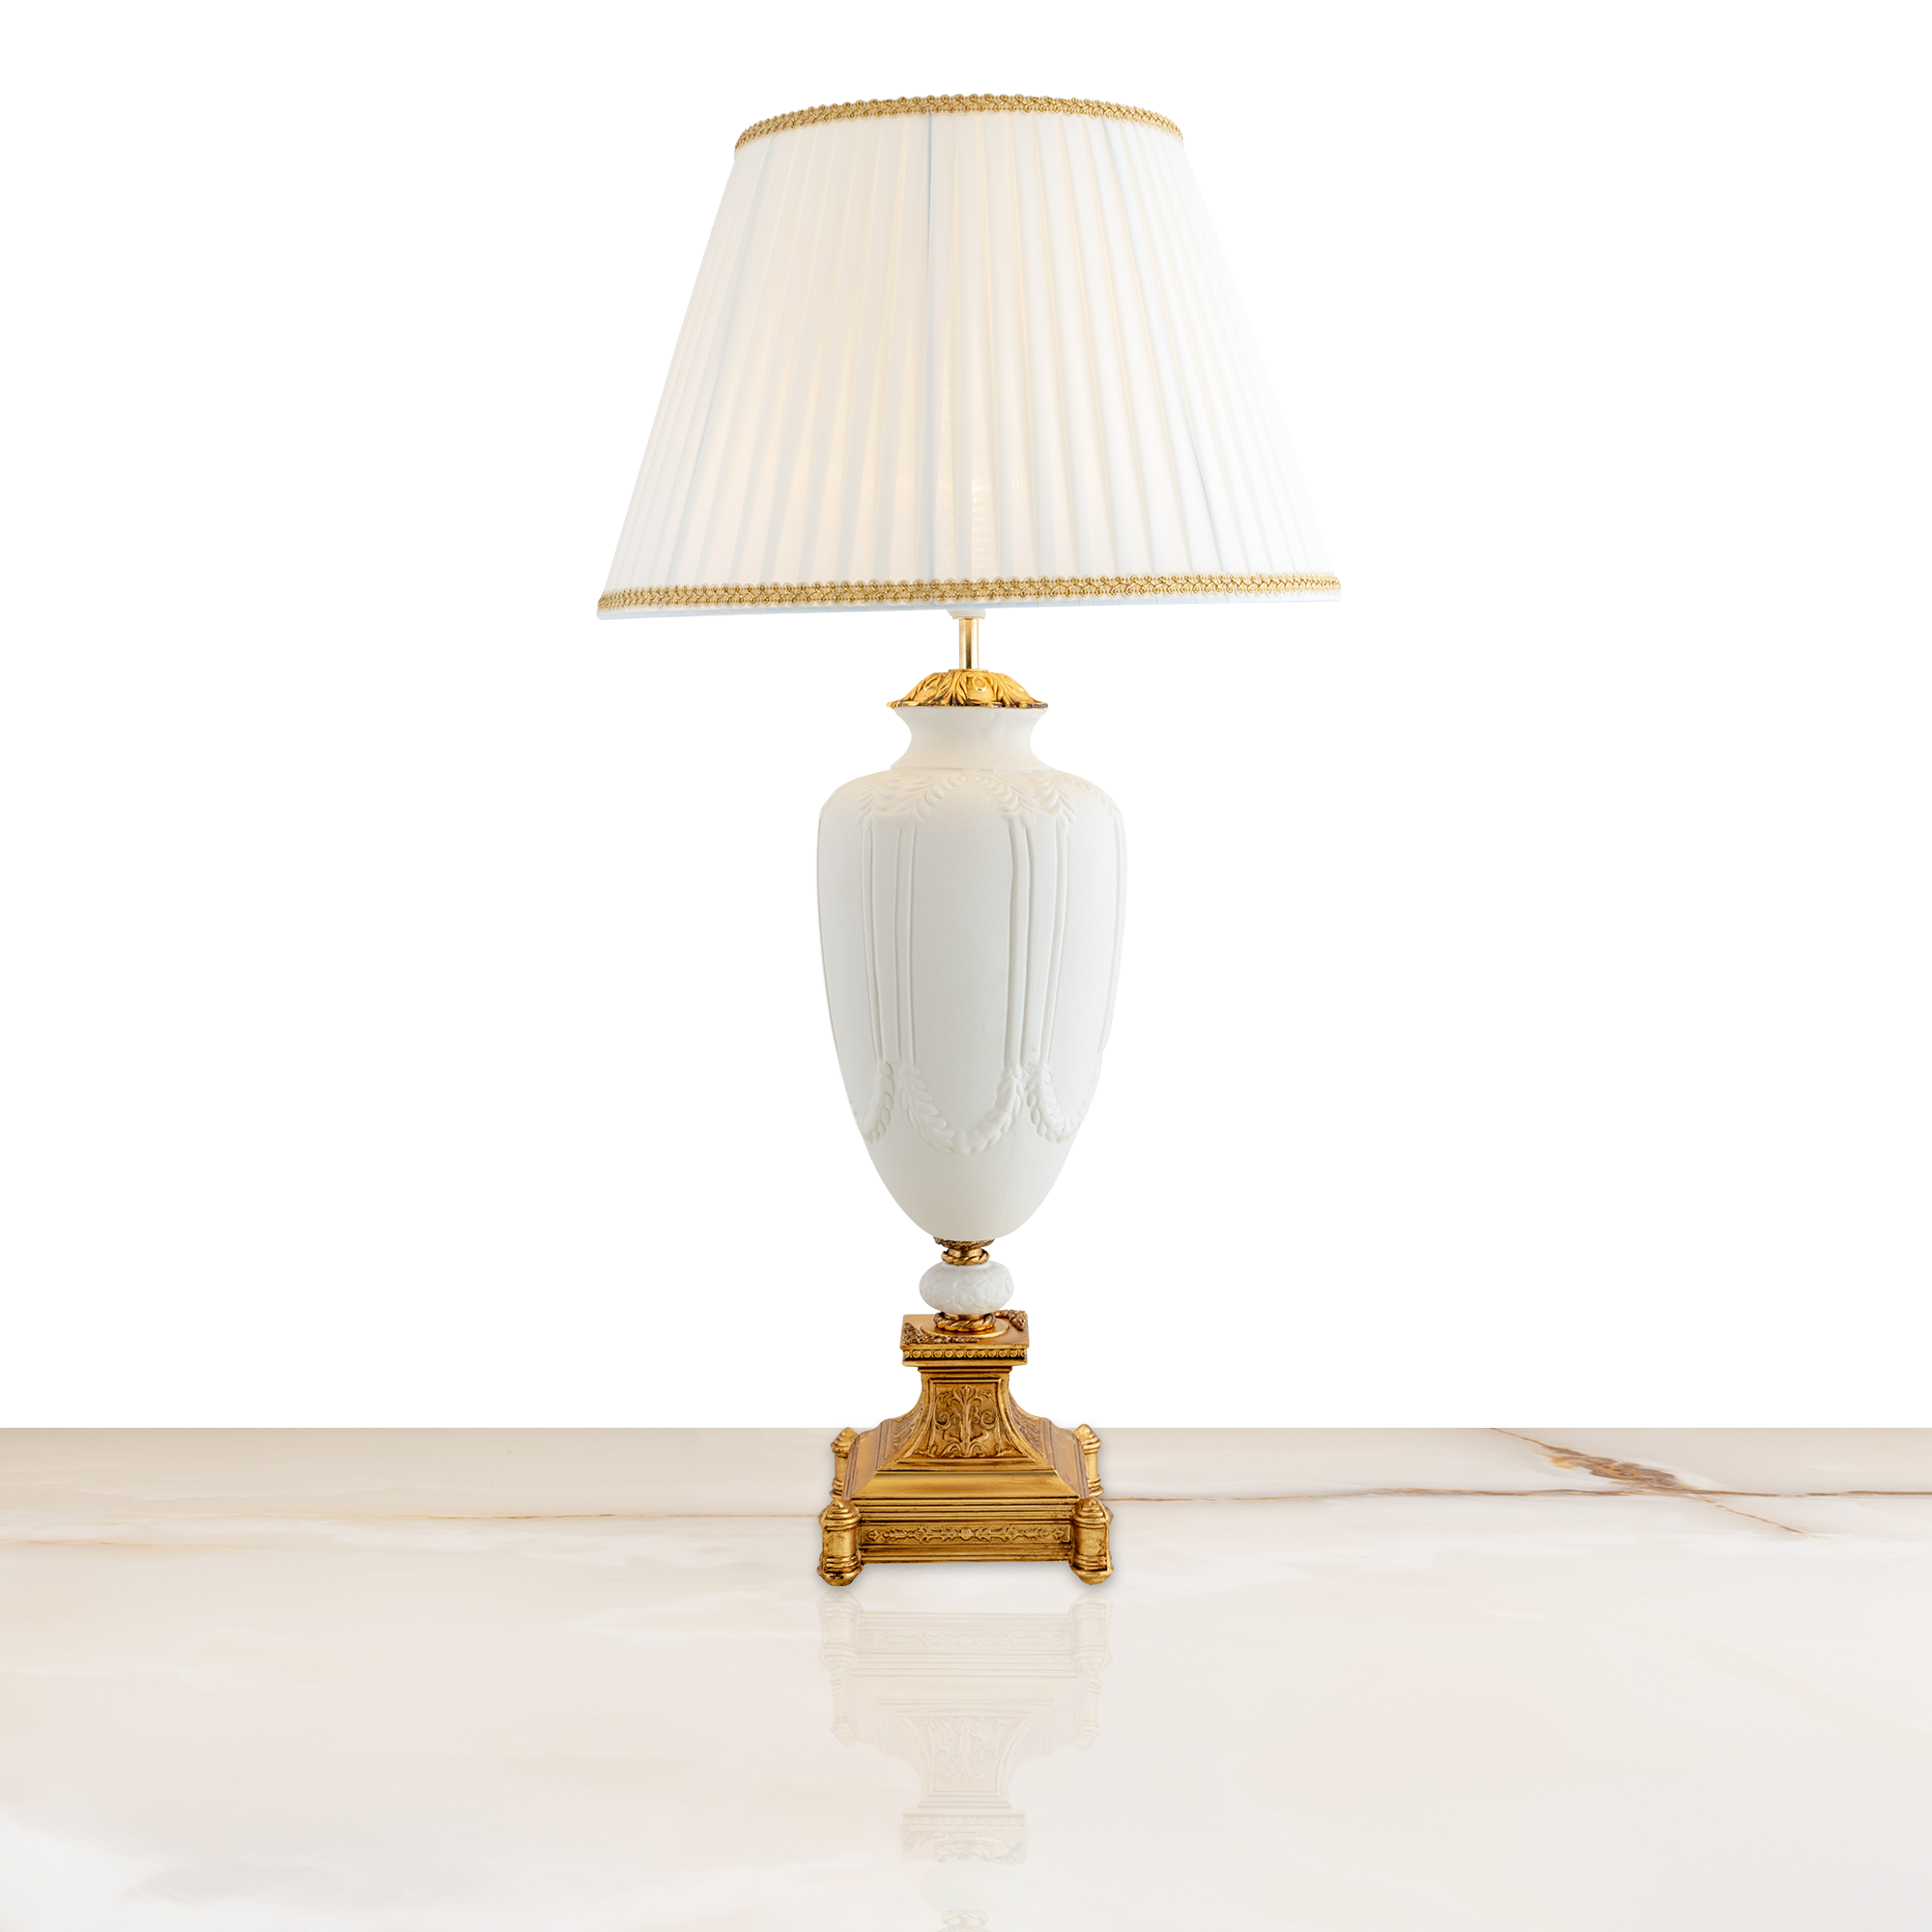 Duke Table Lamp